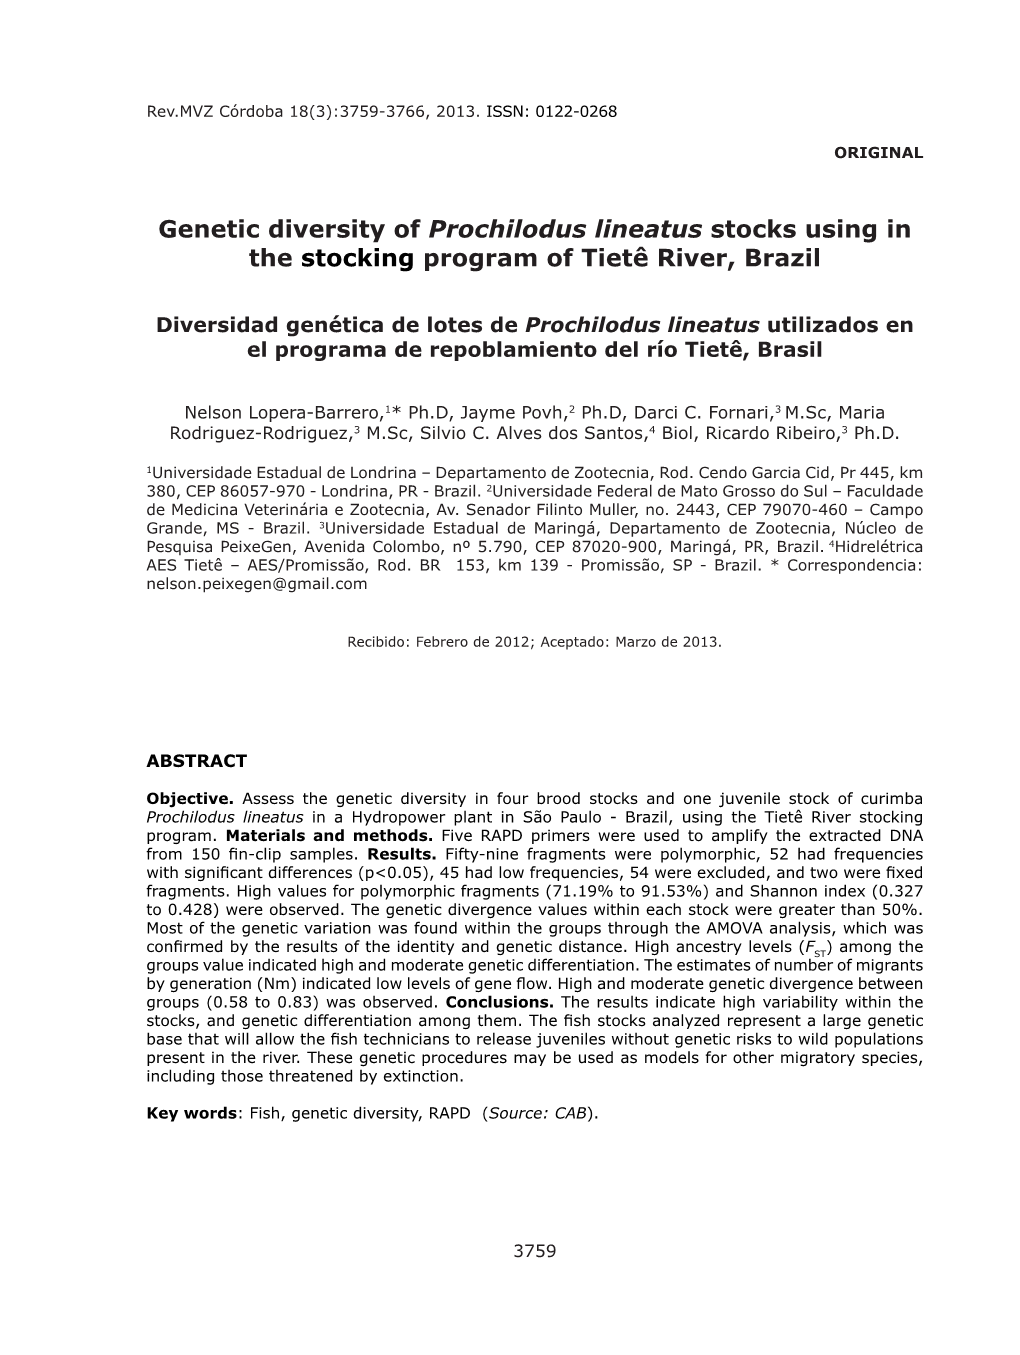 Genetic Diversity of Prochilodus Lineatus Stocks Using in the Stocking Program of Tietê River, Brazil